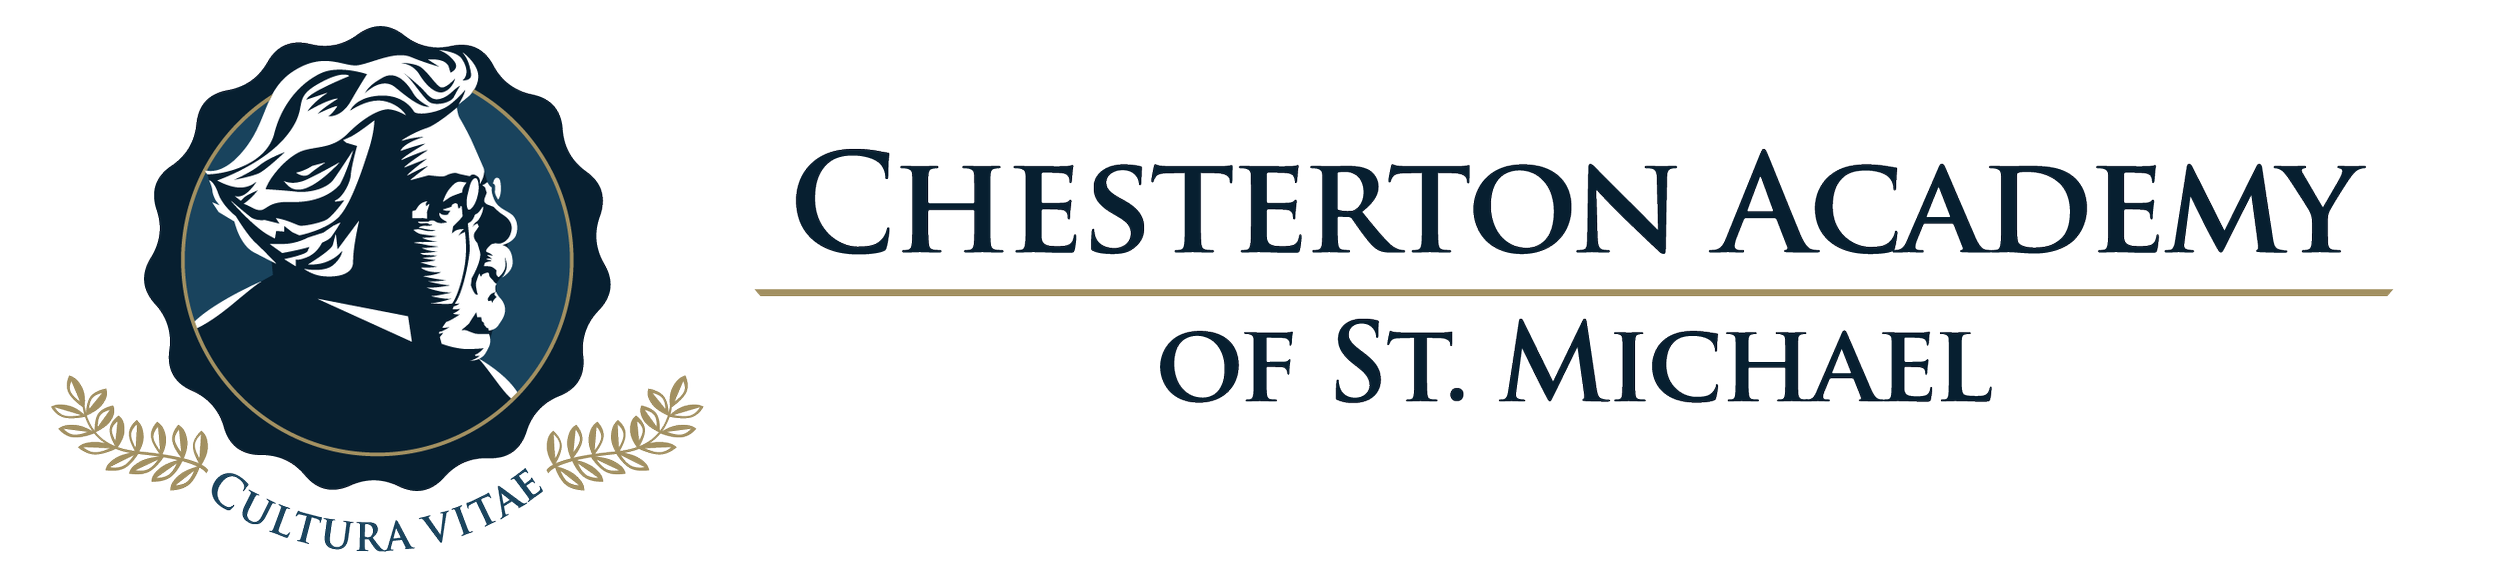 Chesterton Academy of St. Michael